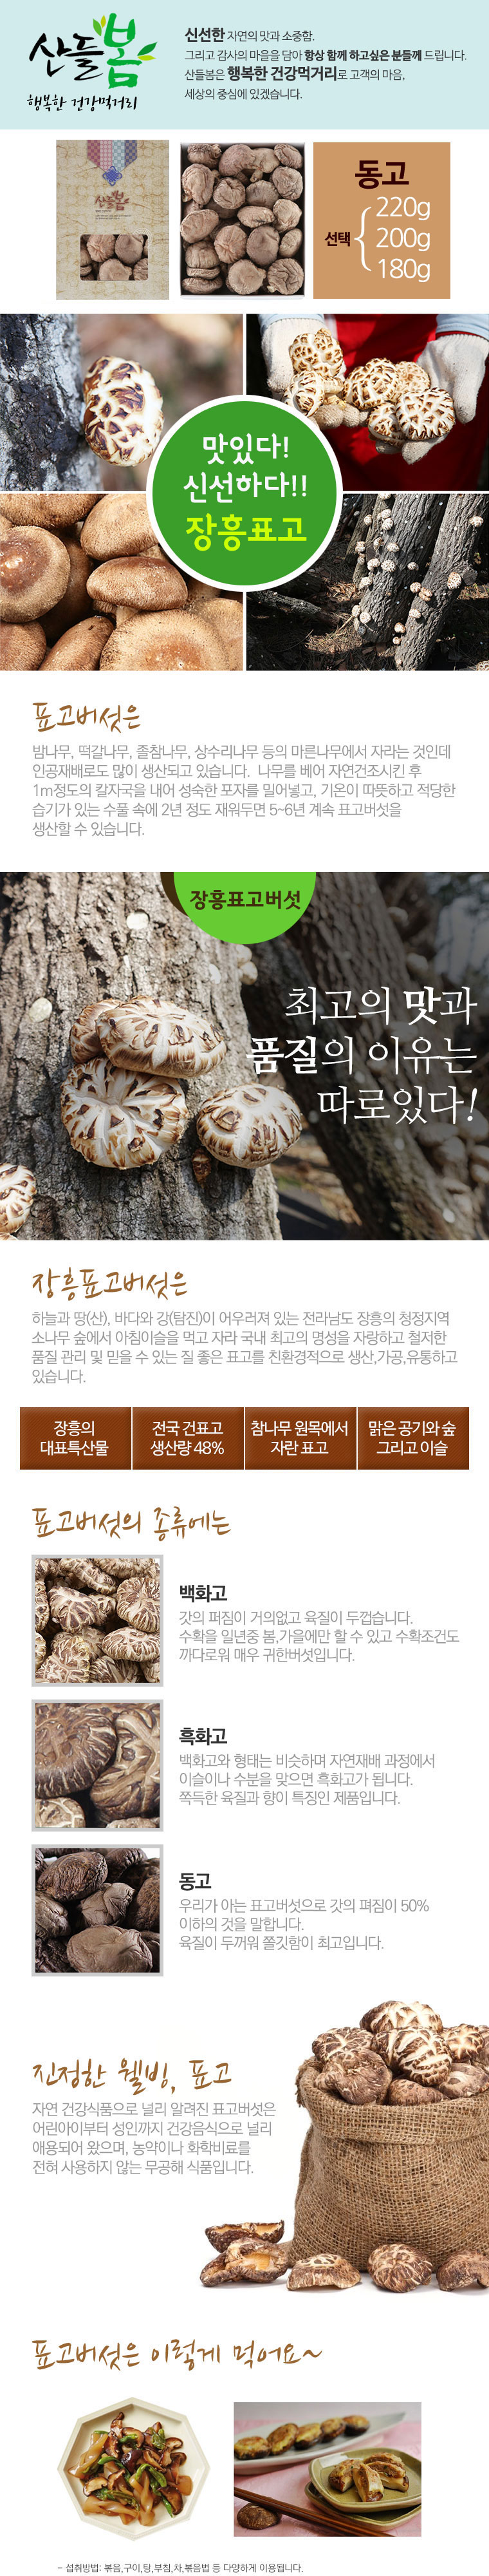 food-mushroom-donggo.jpg